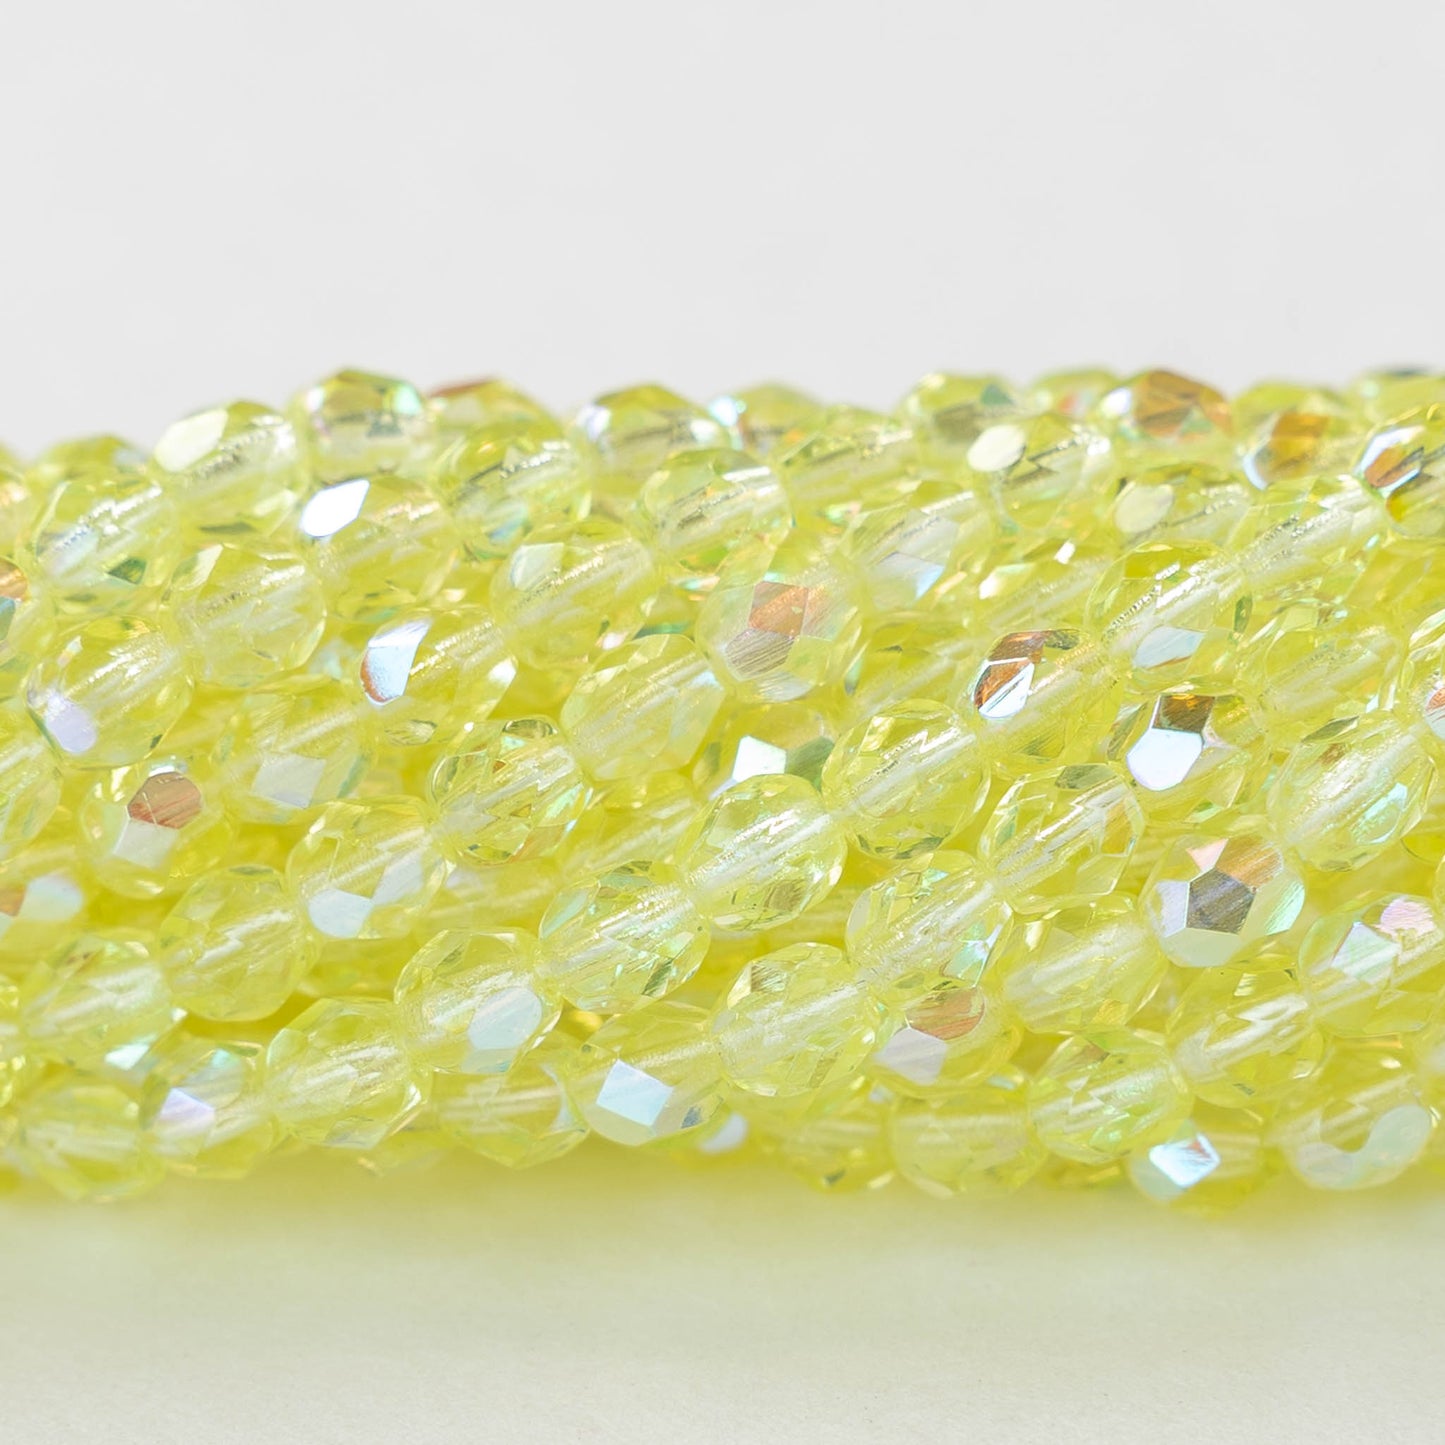 4mm Round Firepolished Beads - Jonquil Yellow AB - 100 Beads